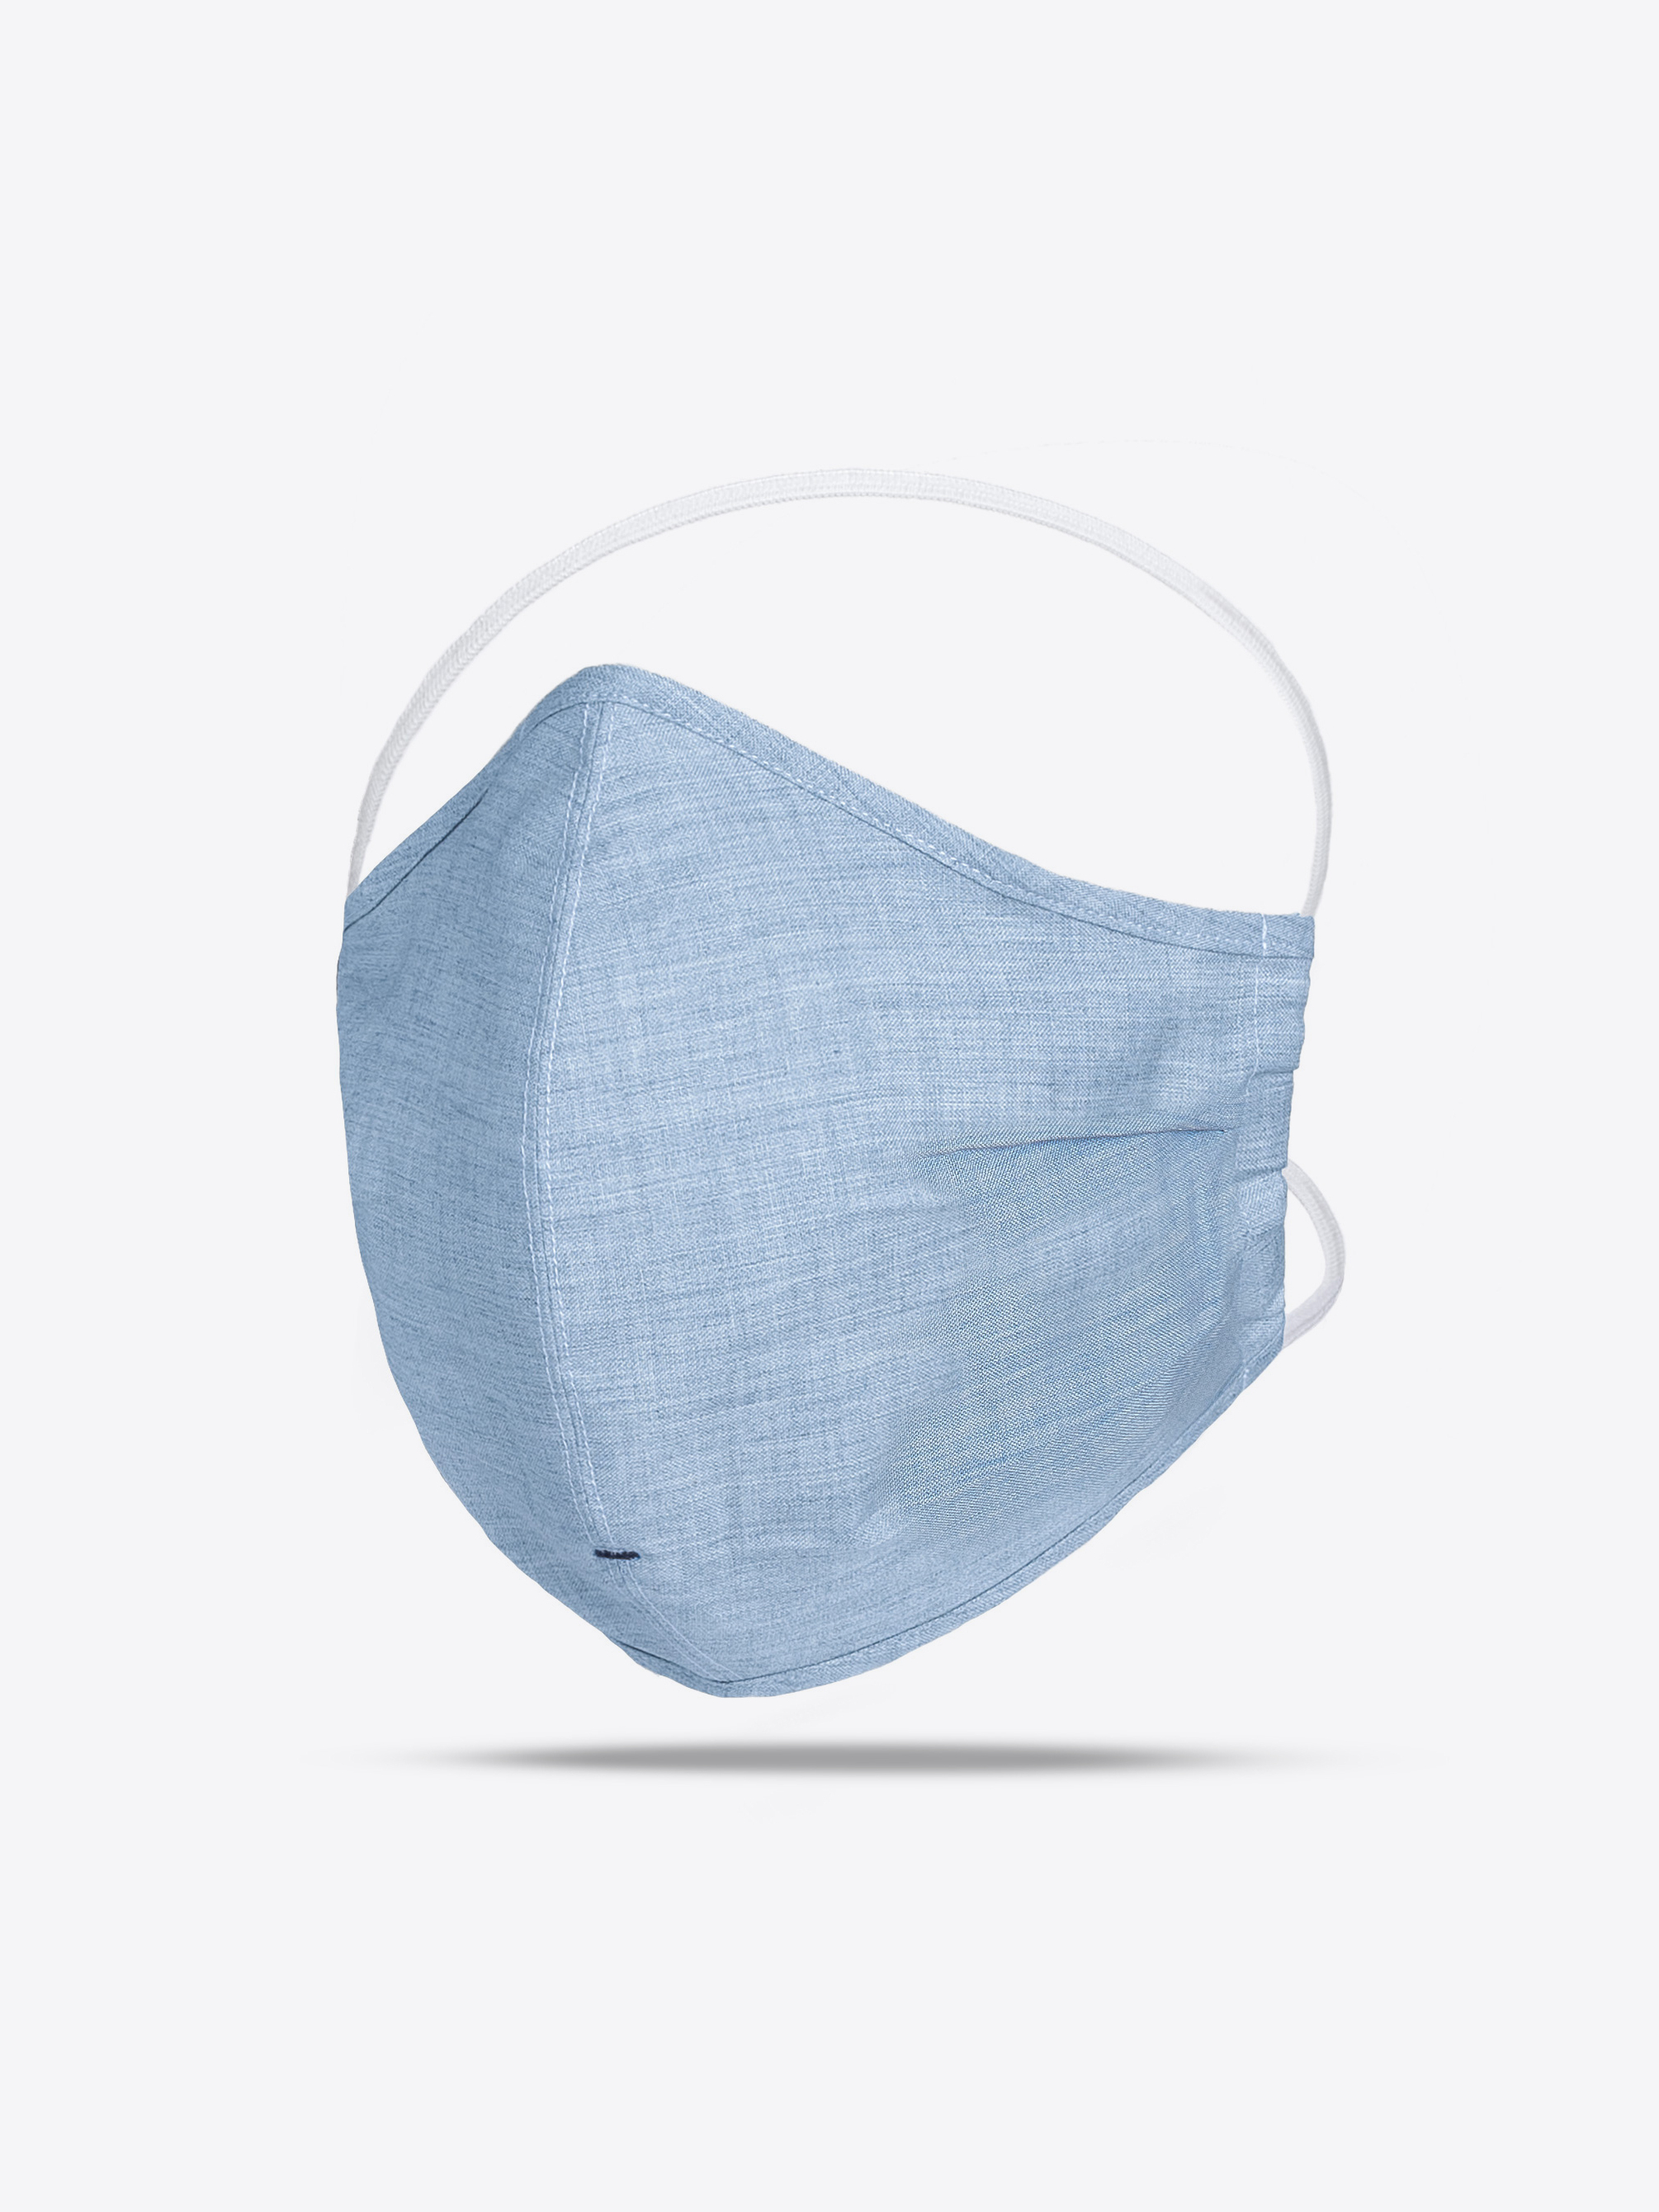 Zoom Image of The Everyday Mask v1.1 - Sky Blue (Single Mask)